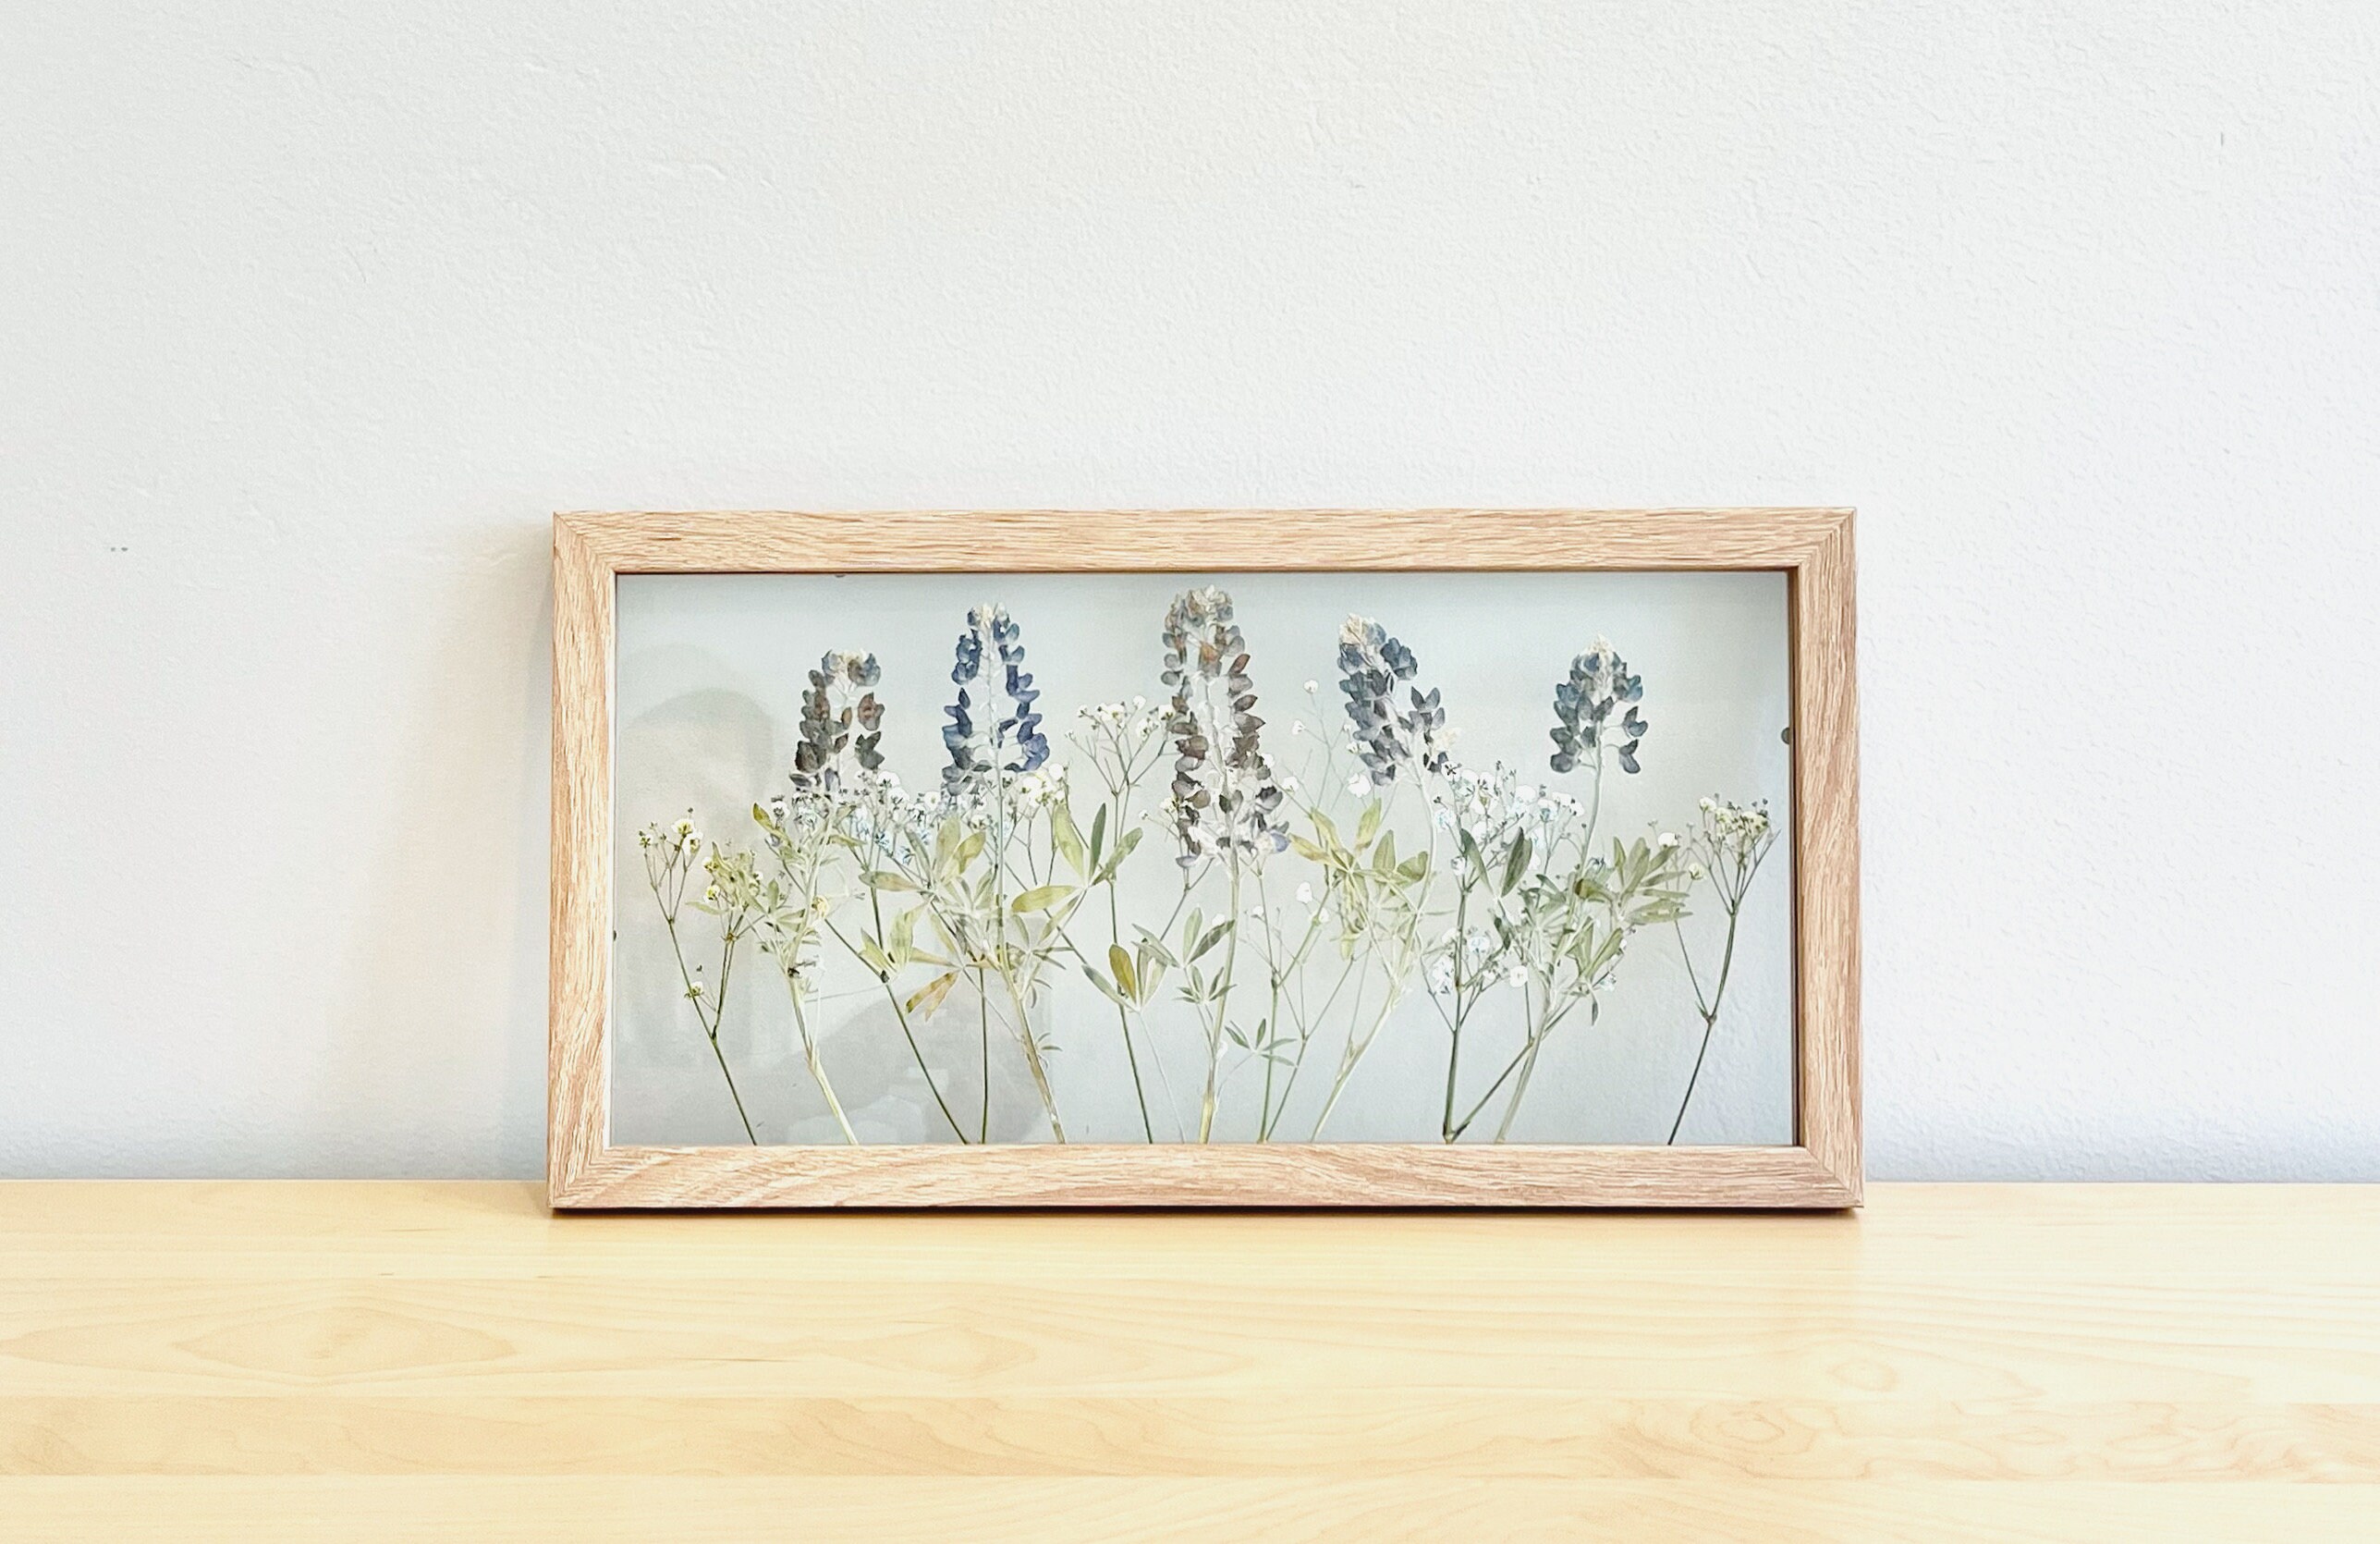 CUSTOM Pressed Flowers in Floating Glass Frame Wood Frame see Description 